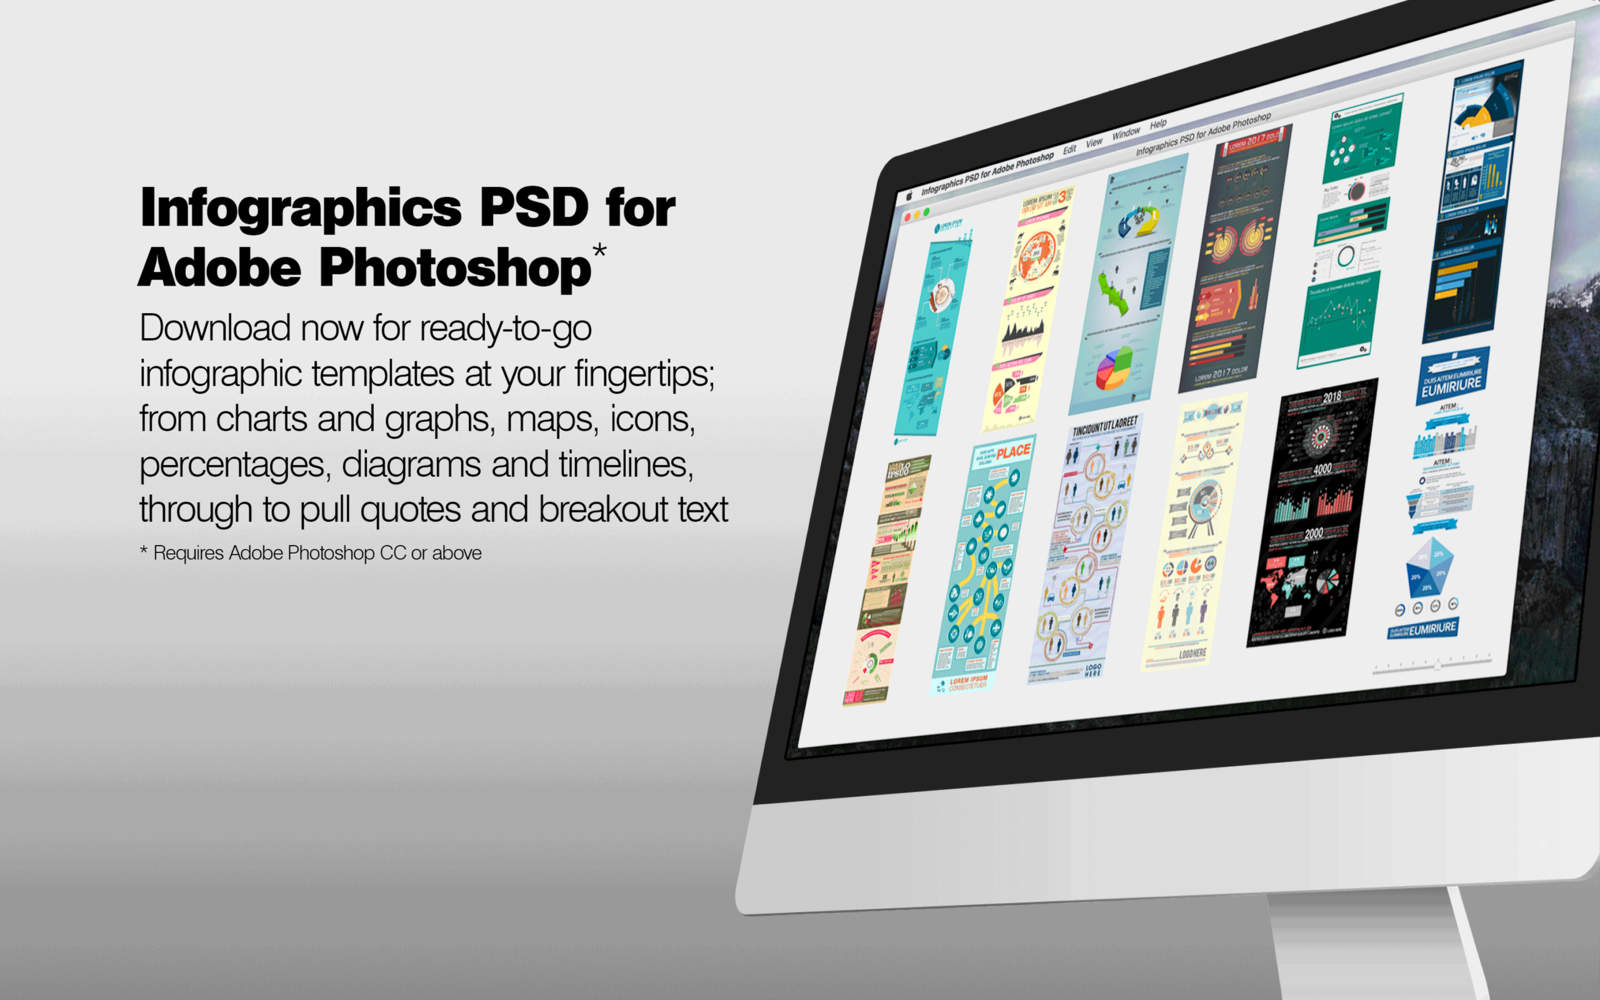 Infographics PSD for Adobe Photoshop 1.0 : Main Window